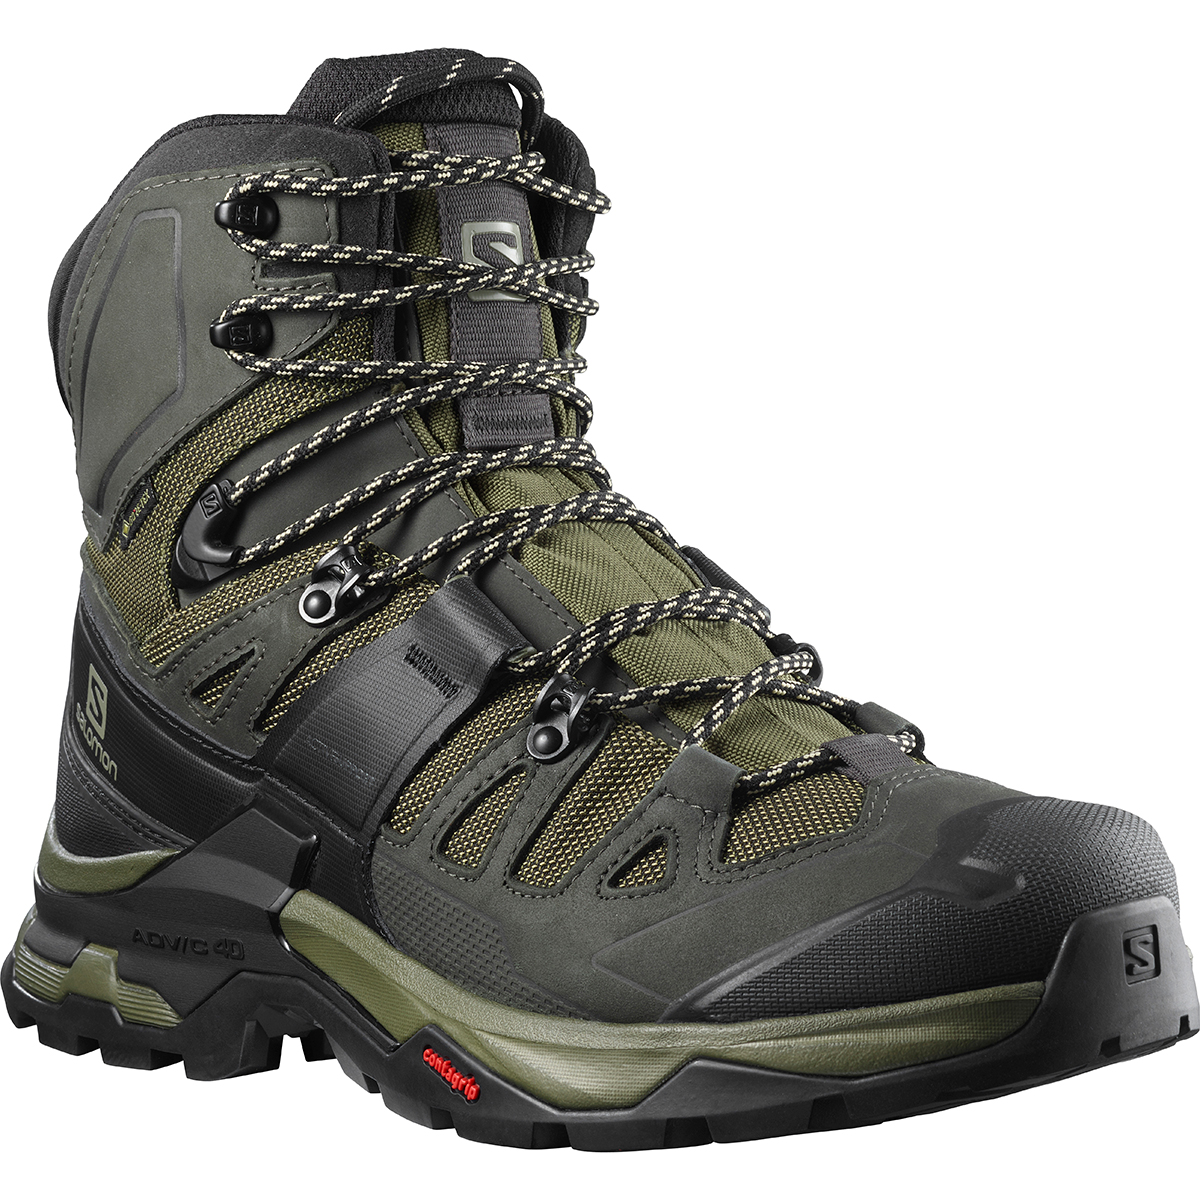 Salomon Men's Quest 4 Gore-Tex Hiking Boot - Size 8.5